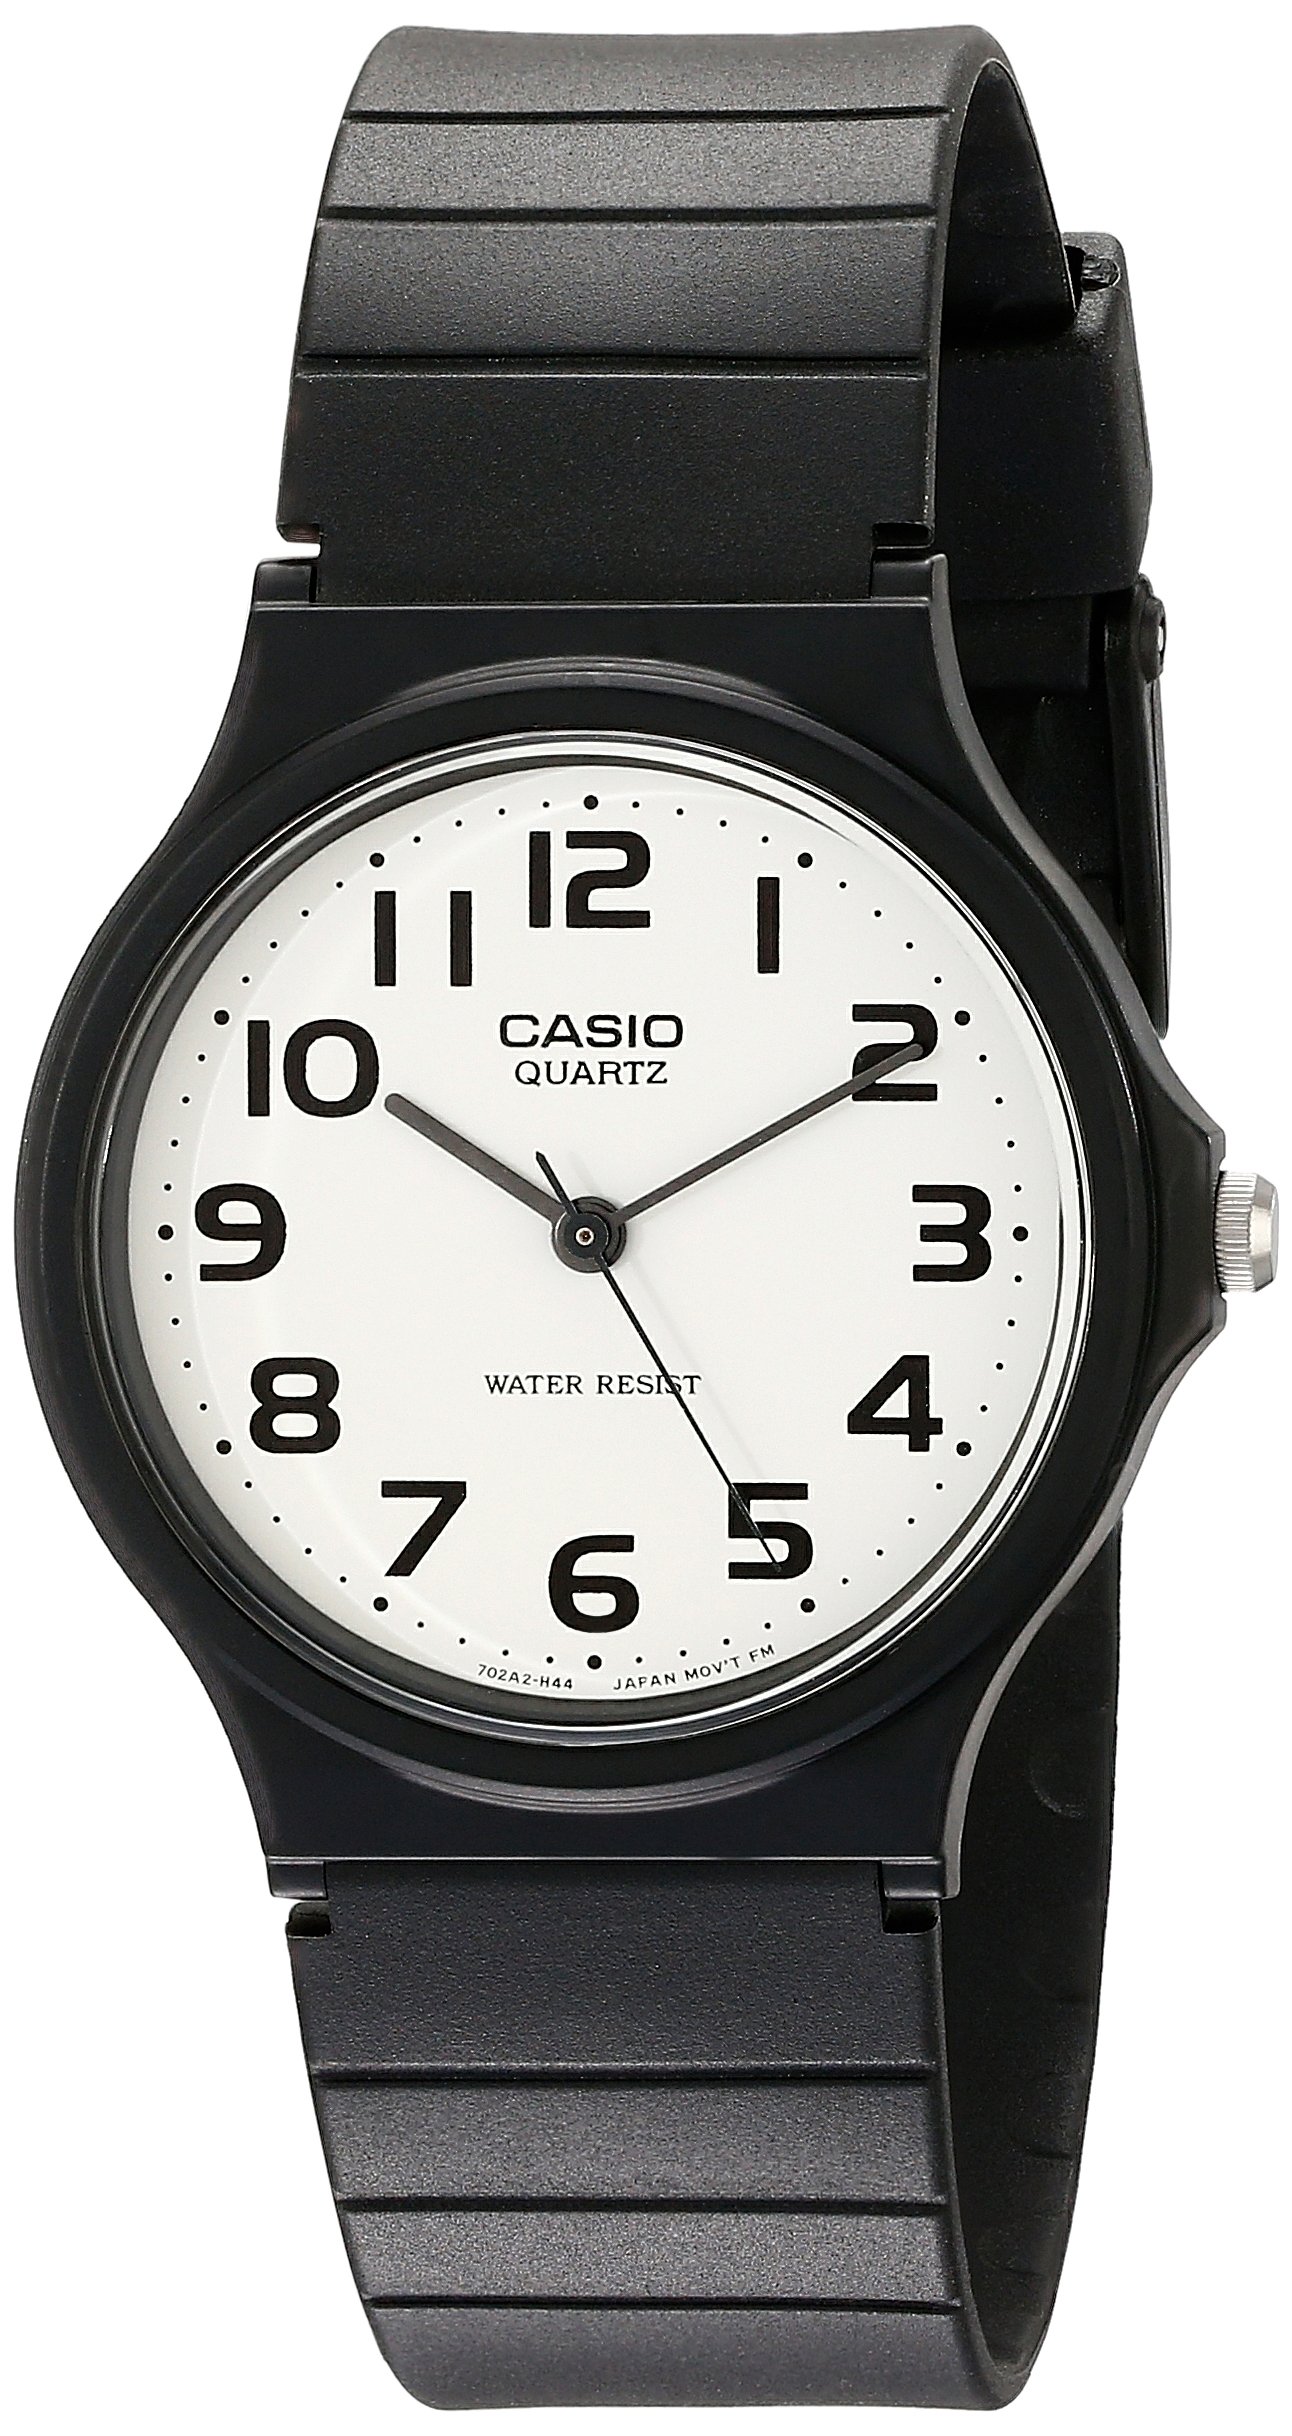 Casio Men's MQ24-7B2 Analog Watch with Black Resin Band